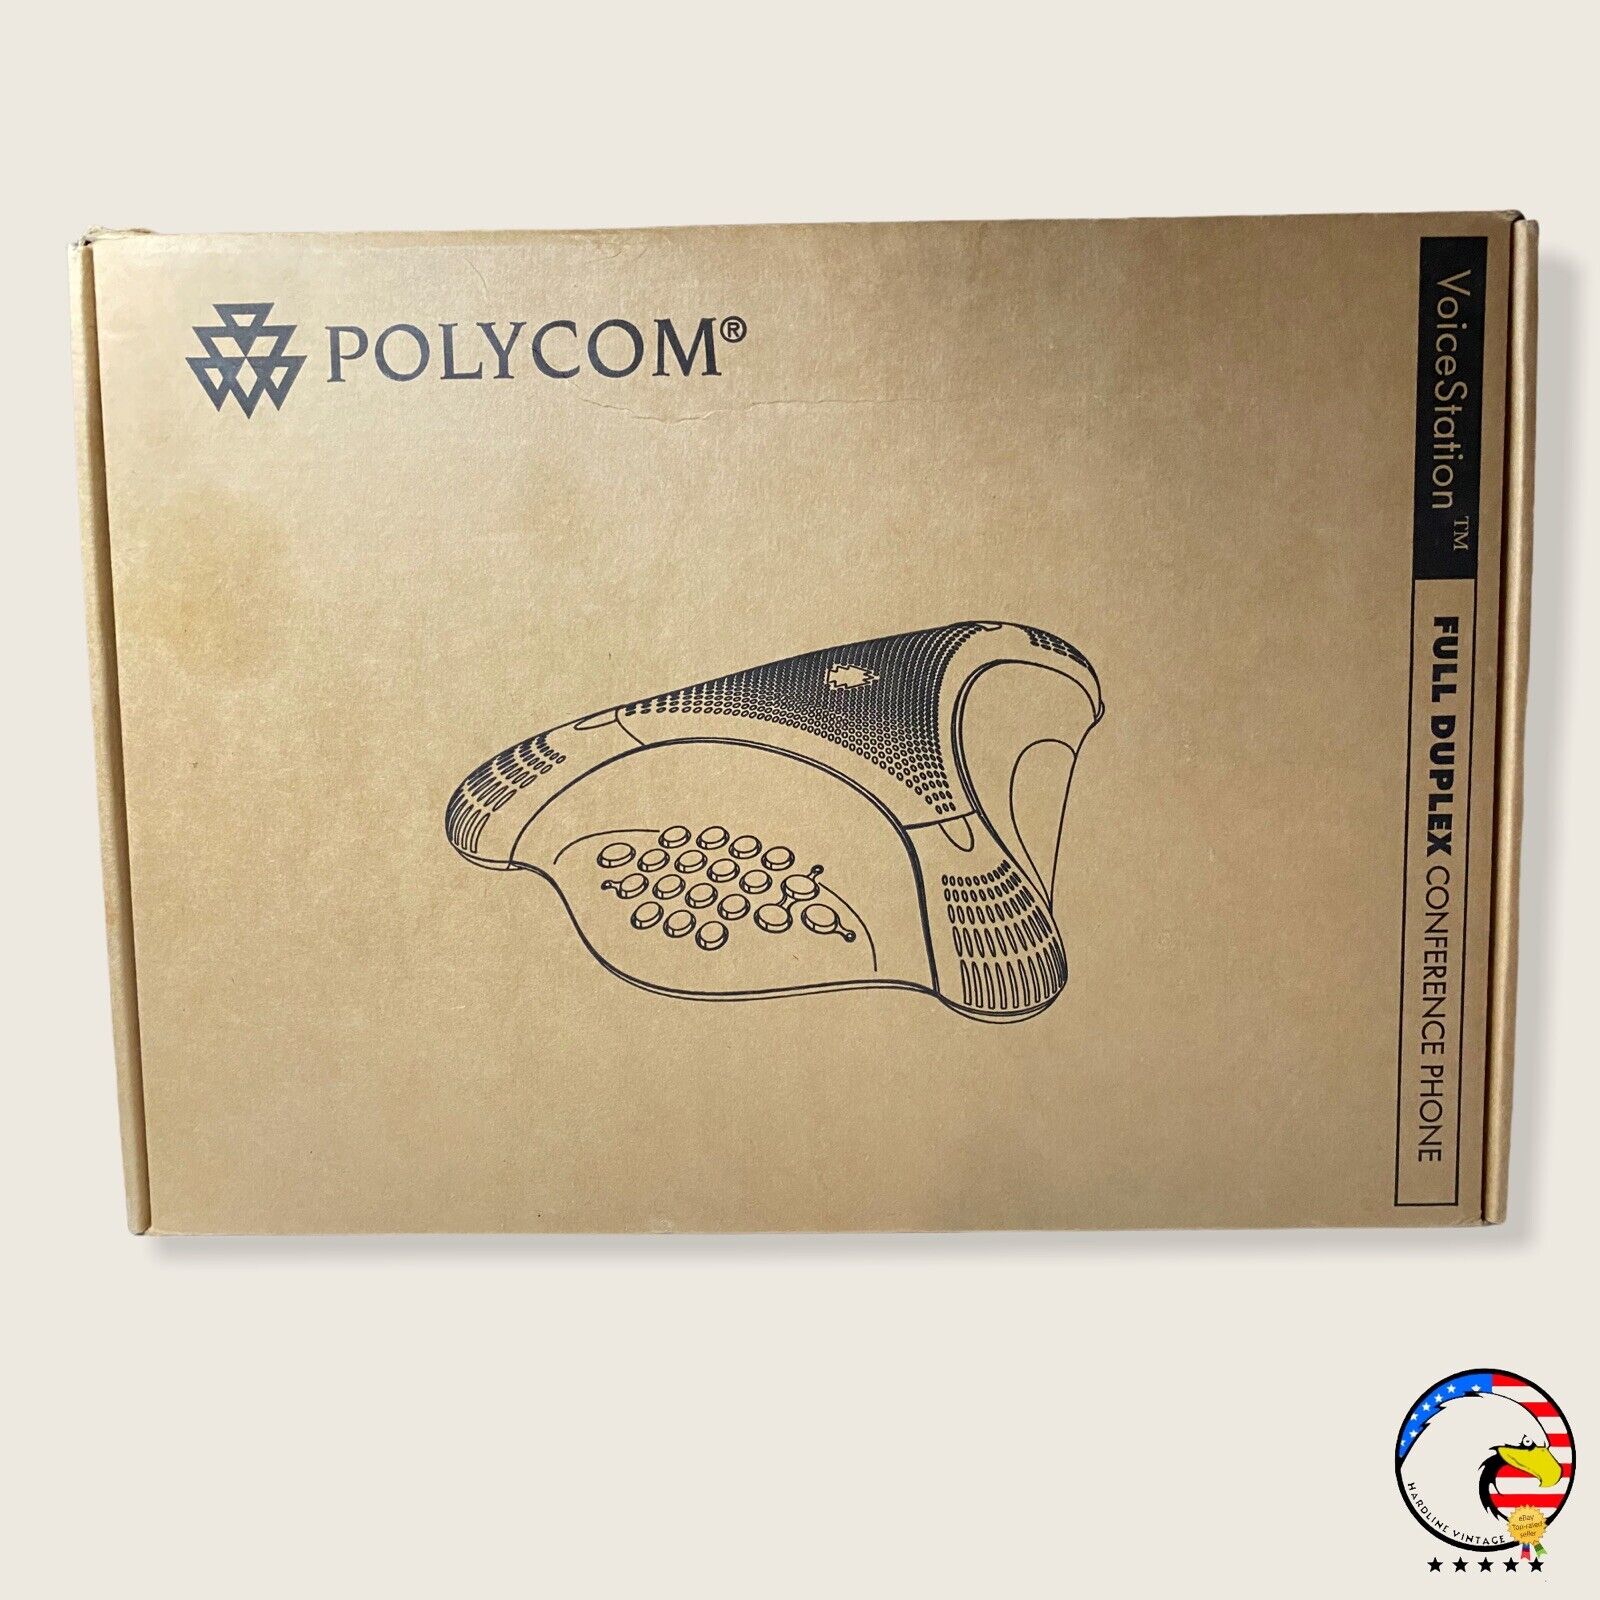 Polycom Voicestation 500 Conference Phone W/ Power Module 2201-17900-001